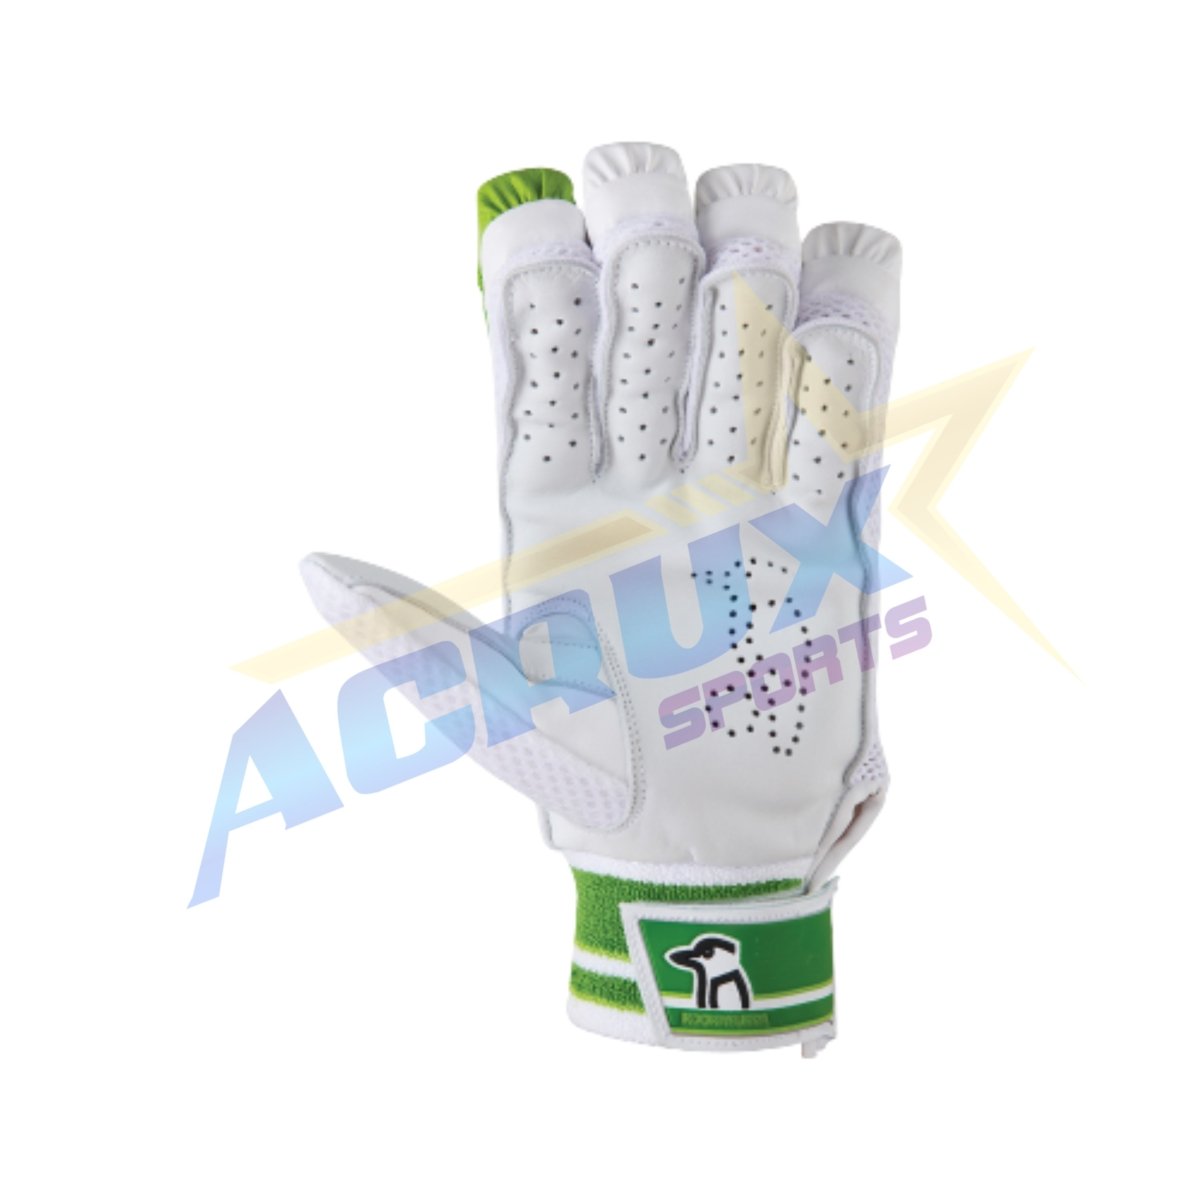 Kookaburra Kahuna Pro 5.0 Cricket Batting Gloves